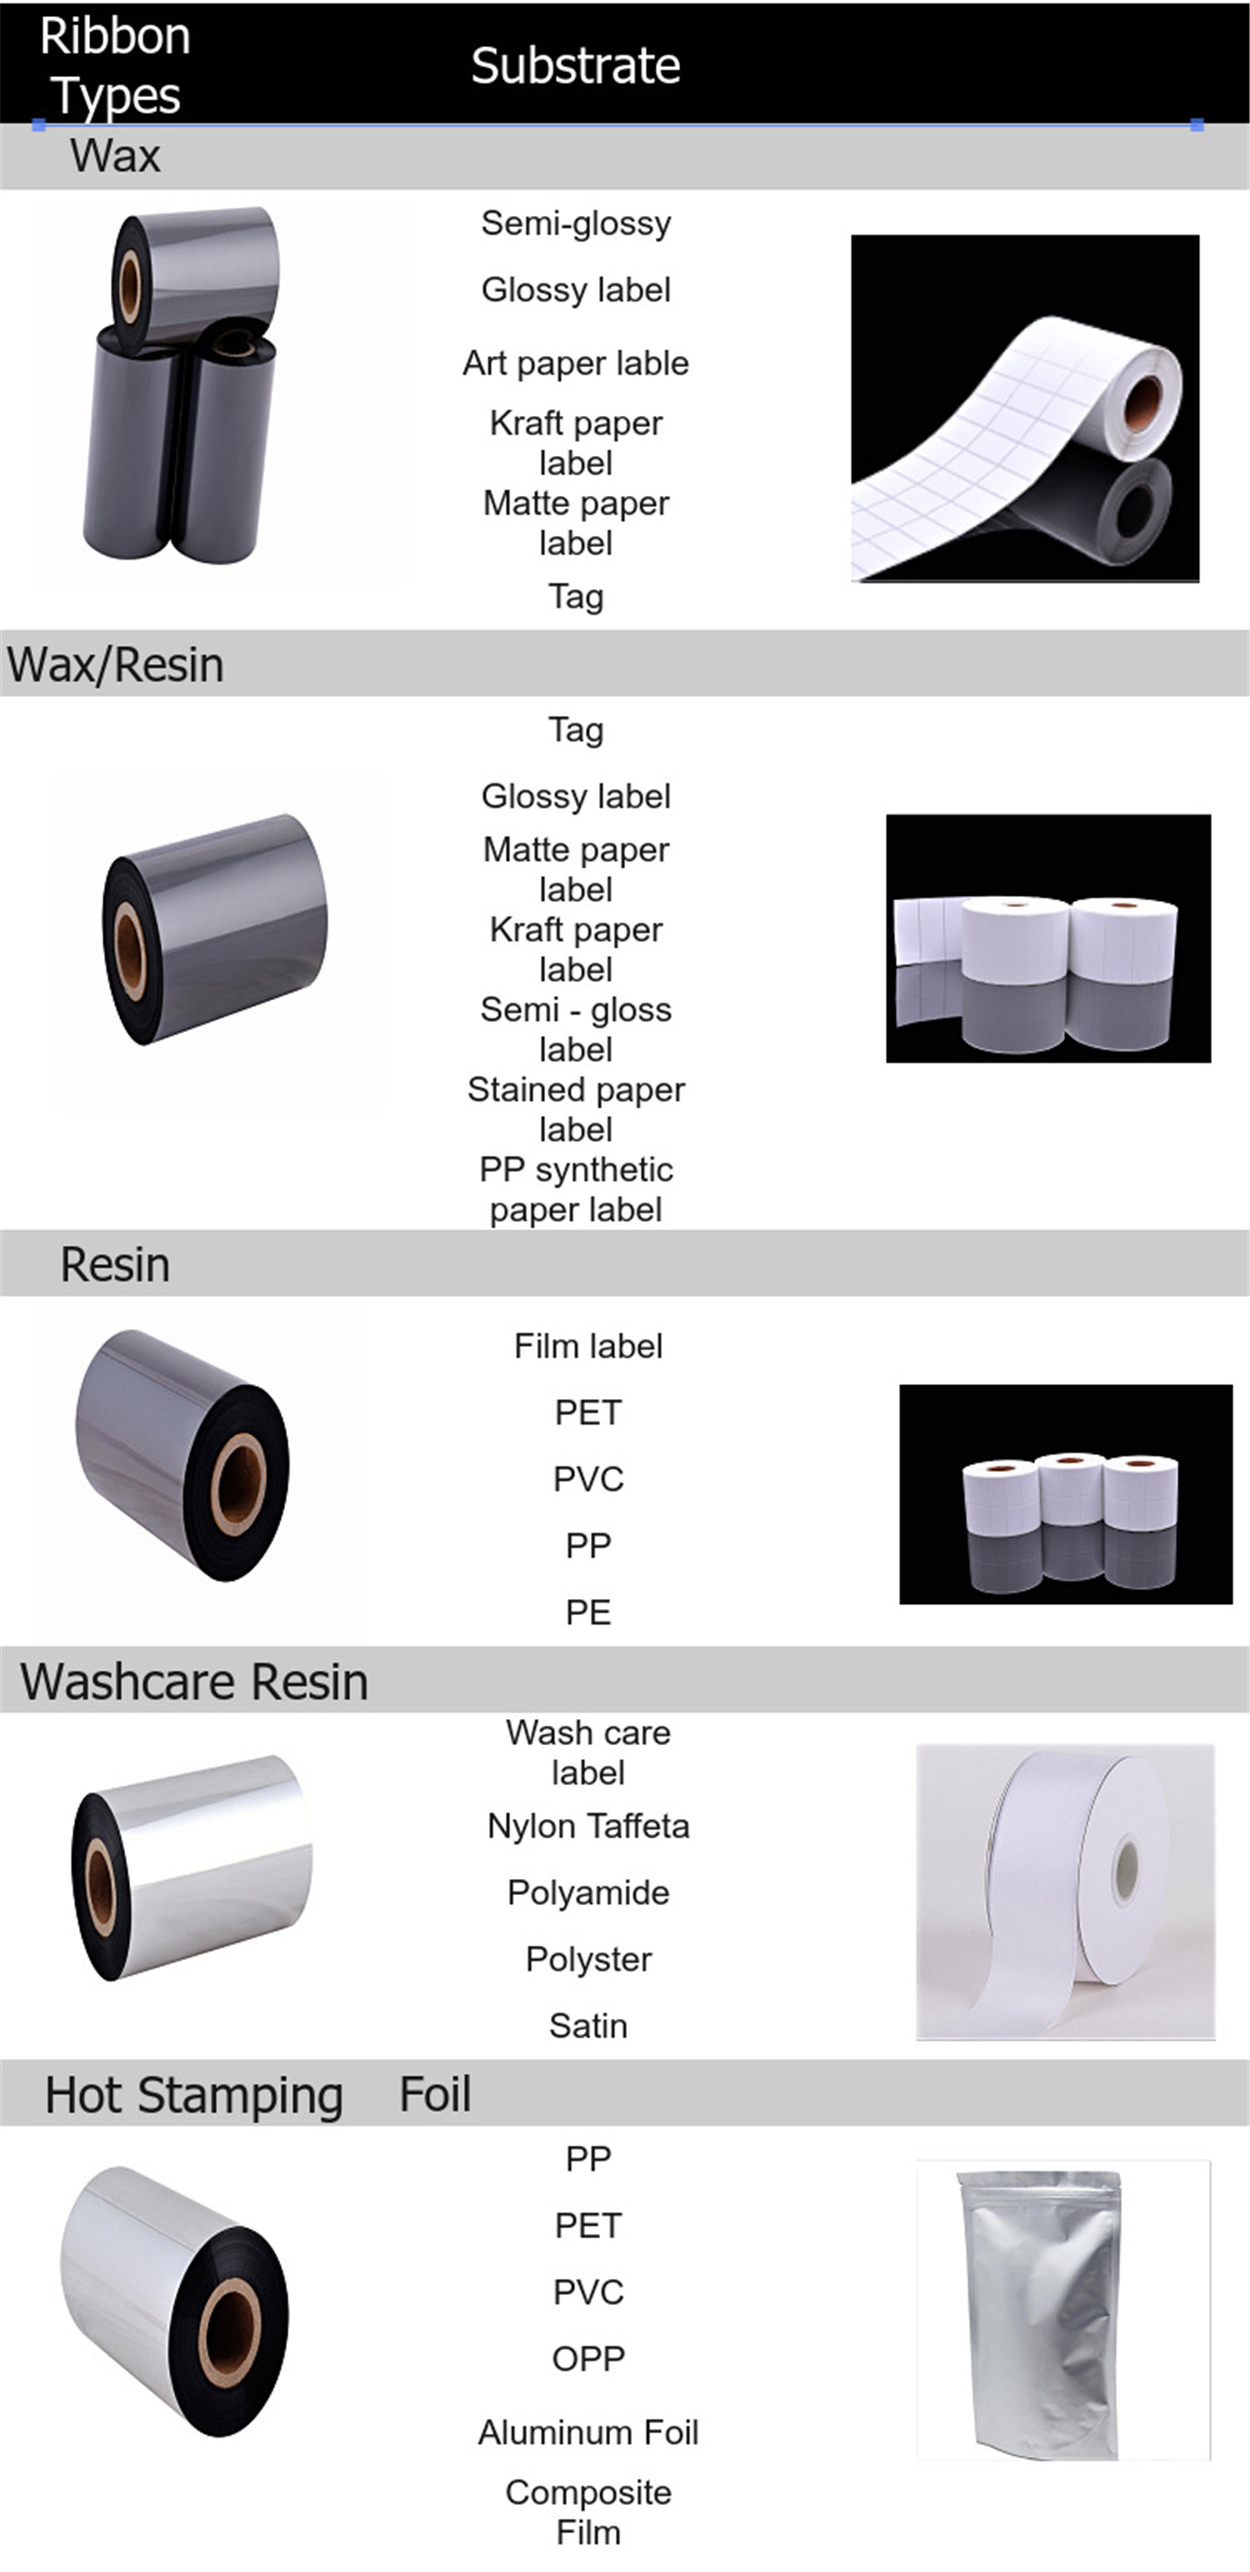 I-Resin-heat-transfer-bar-code-printer-ribbon01_02